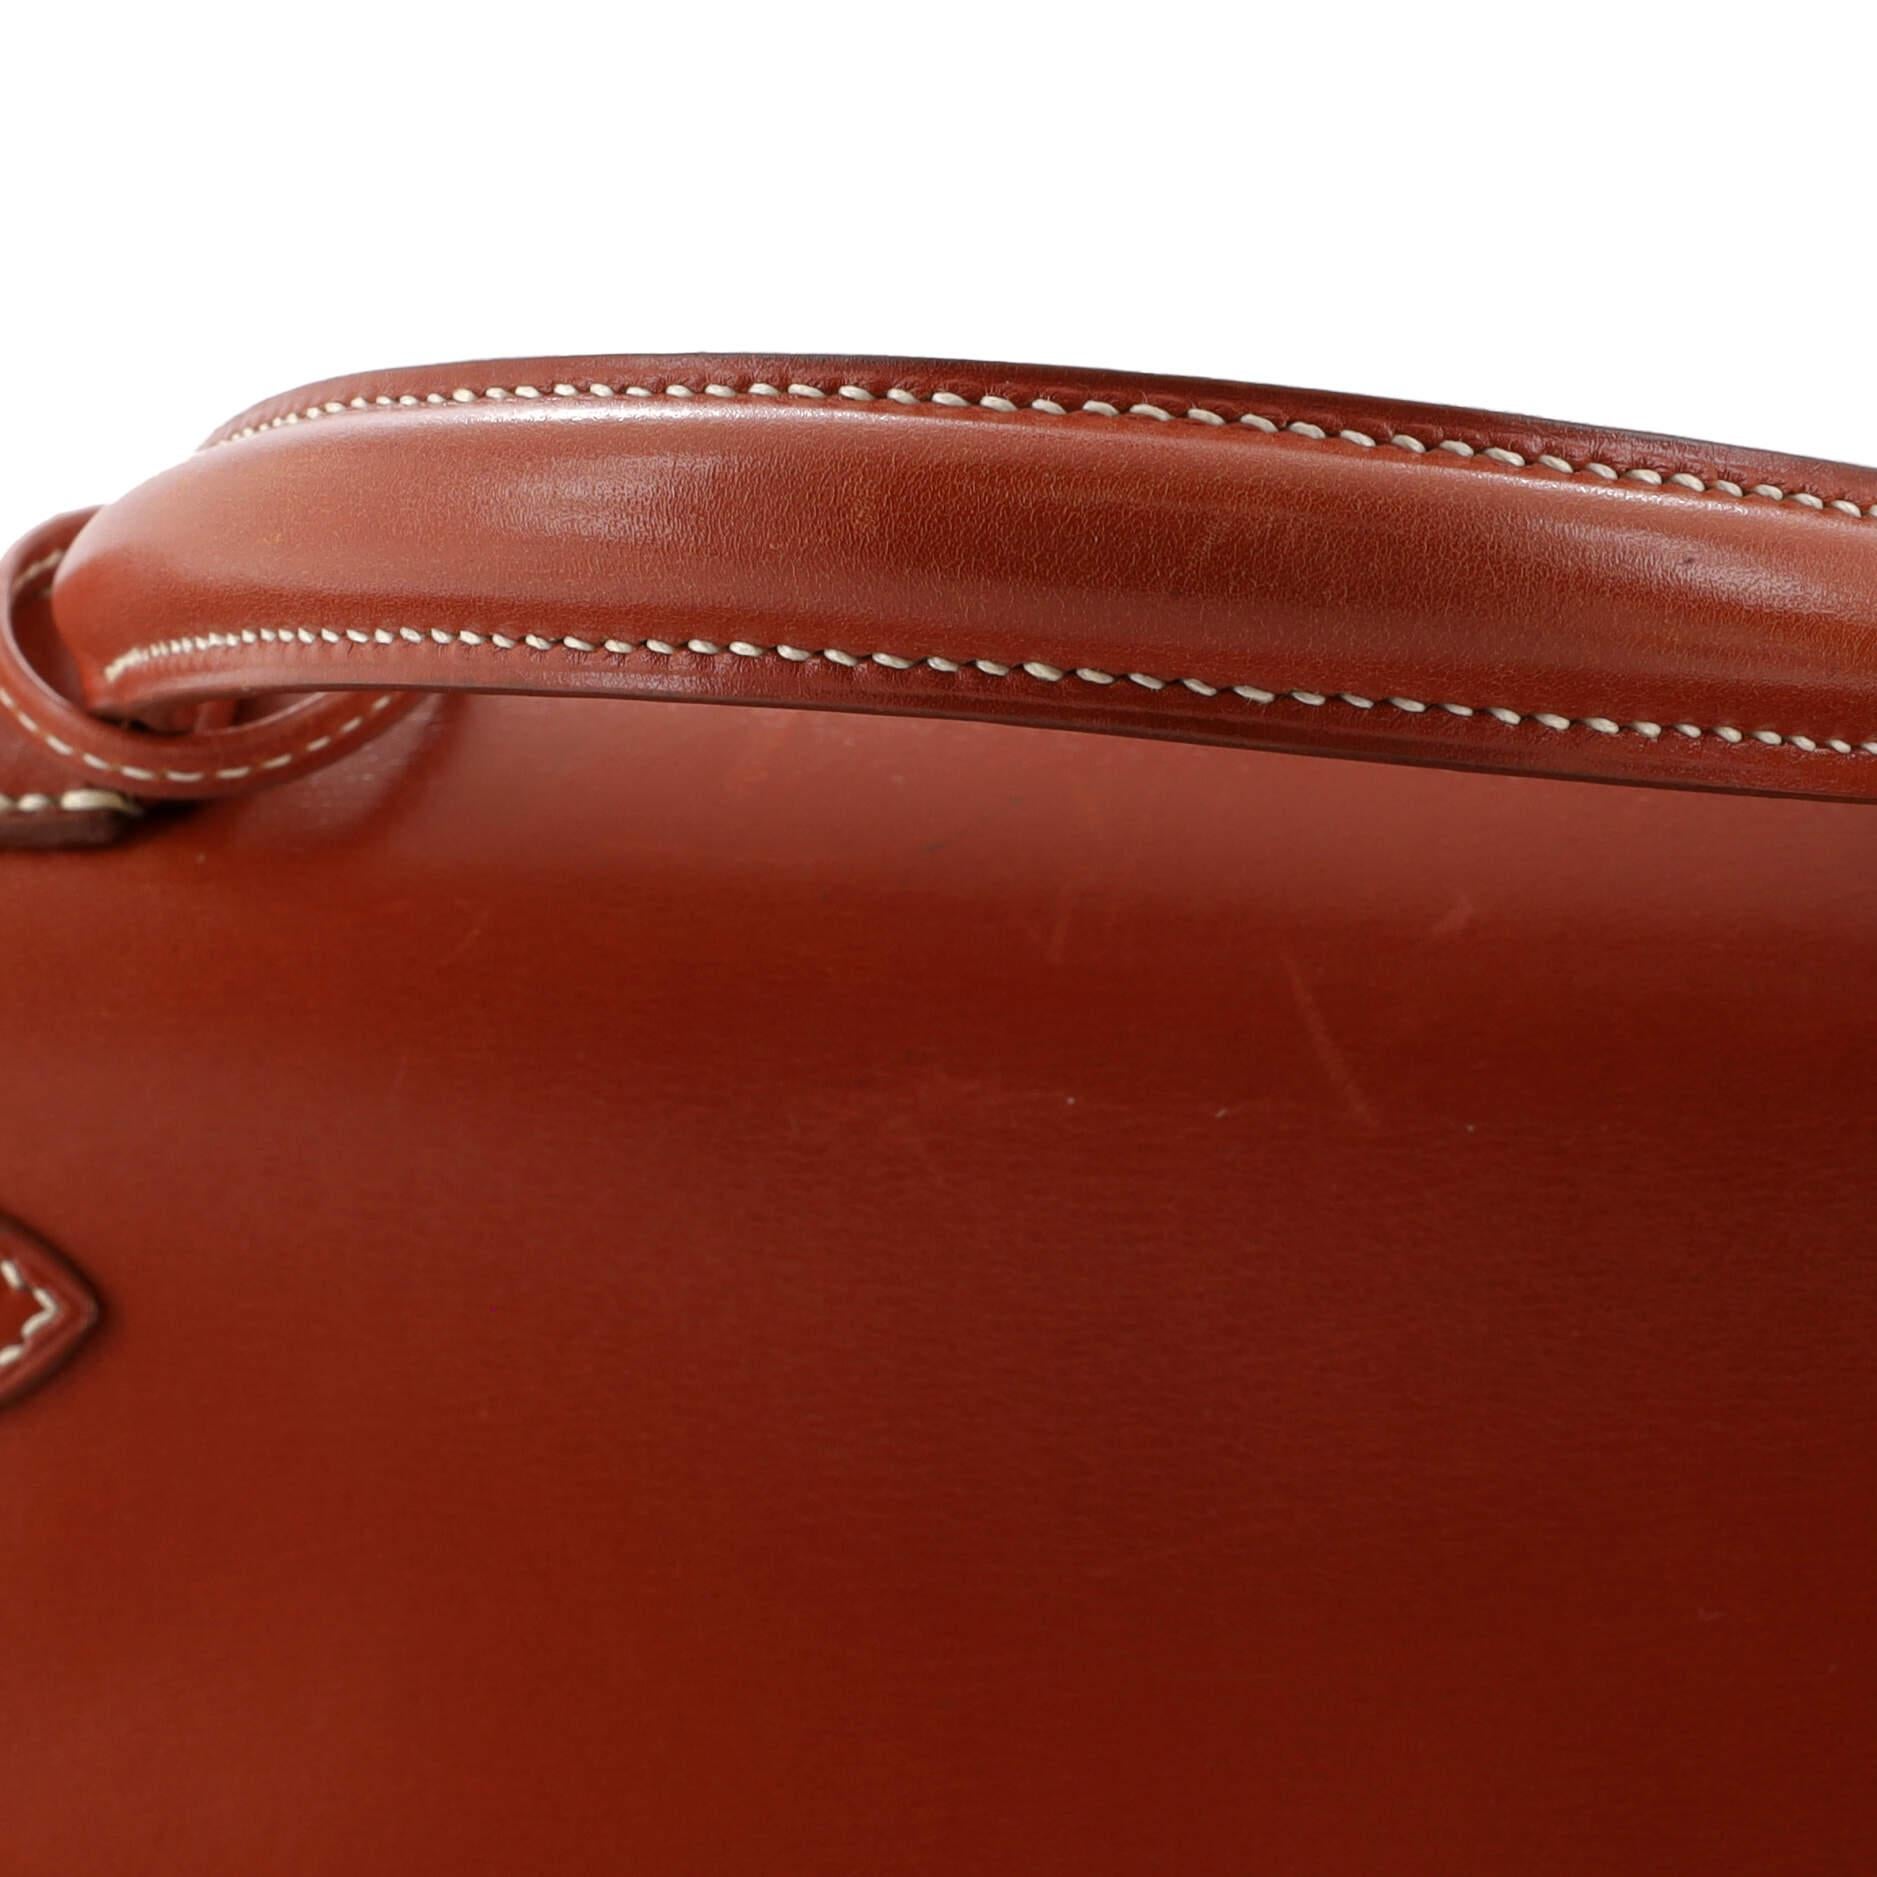 Hermes Kelly Handbag Brique Box Calf with Gold Hardware 28 7